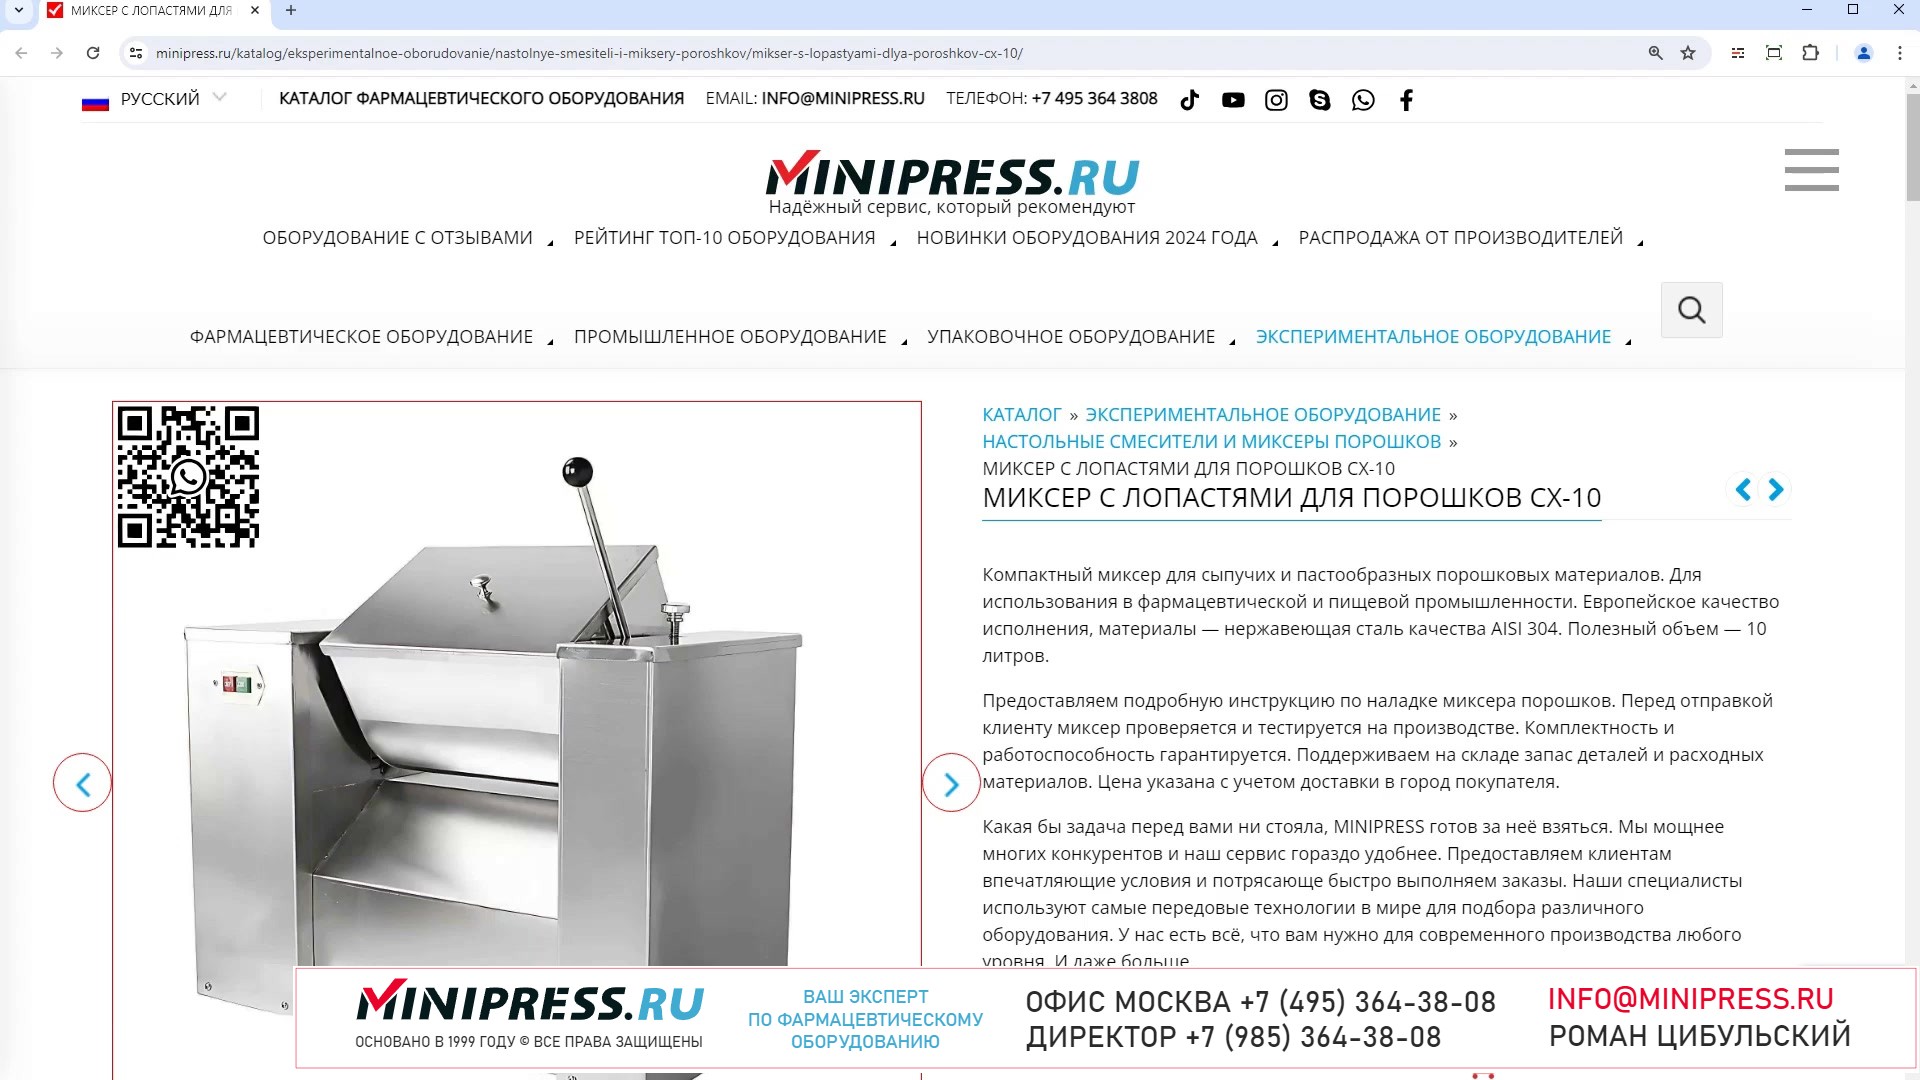 Minipress.ru Миксер с лопастями для порошков CX-10